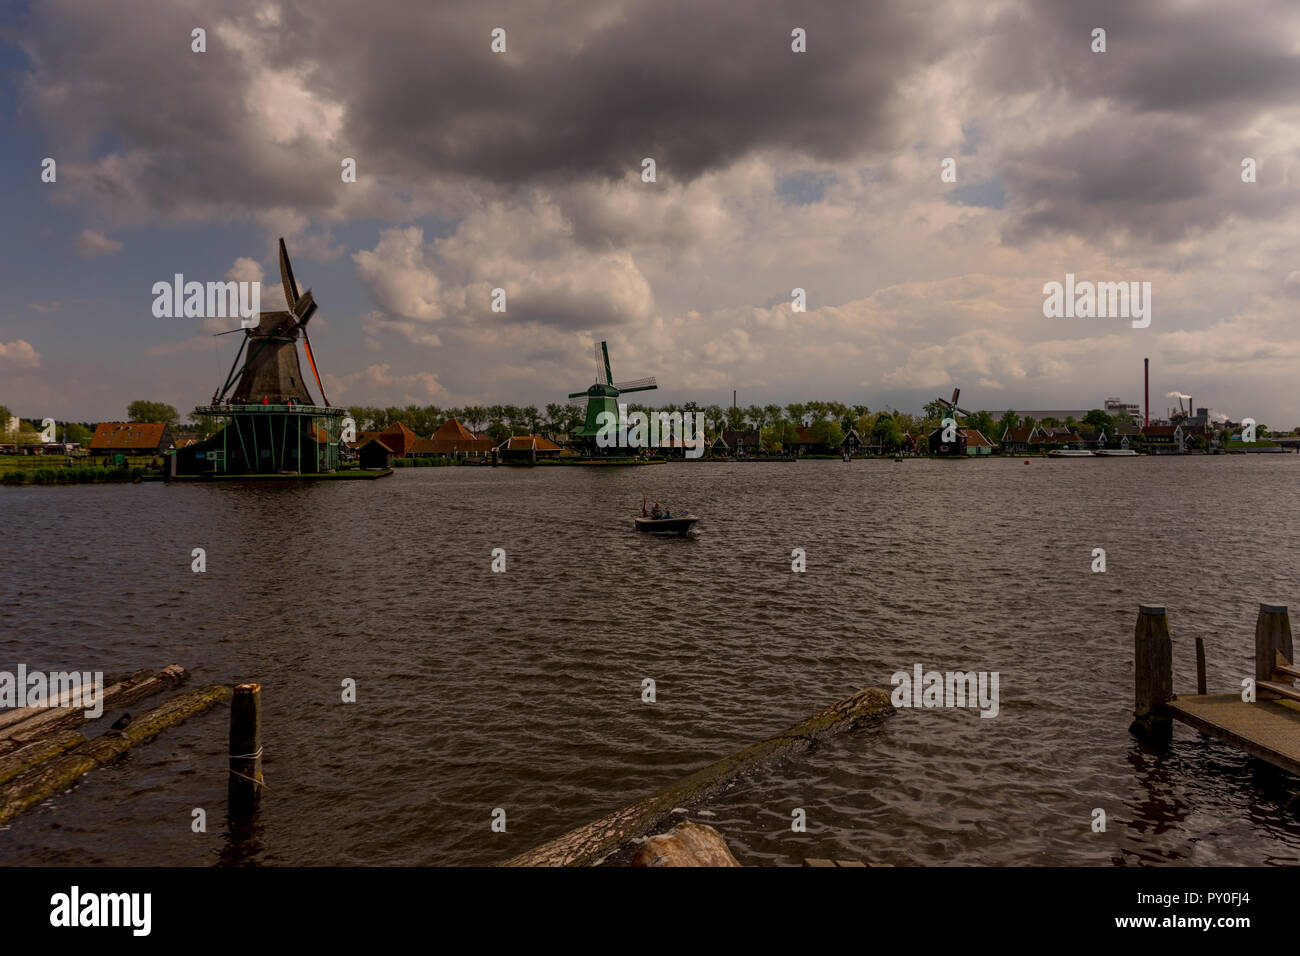 Netherlands, Zaanse Schans, windmills next to a body of water Stock Photo